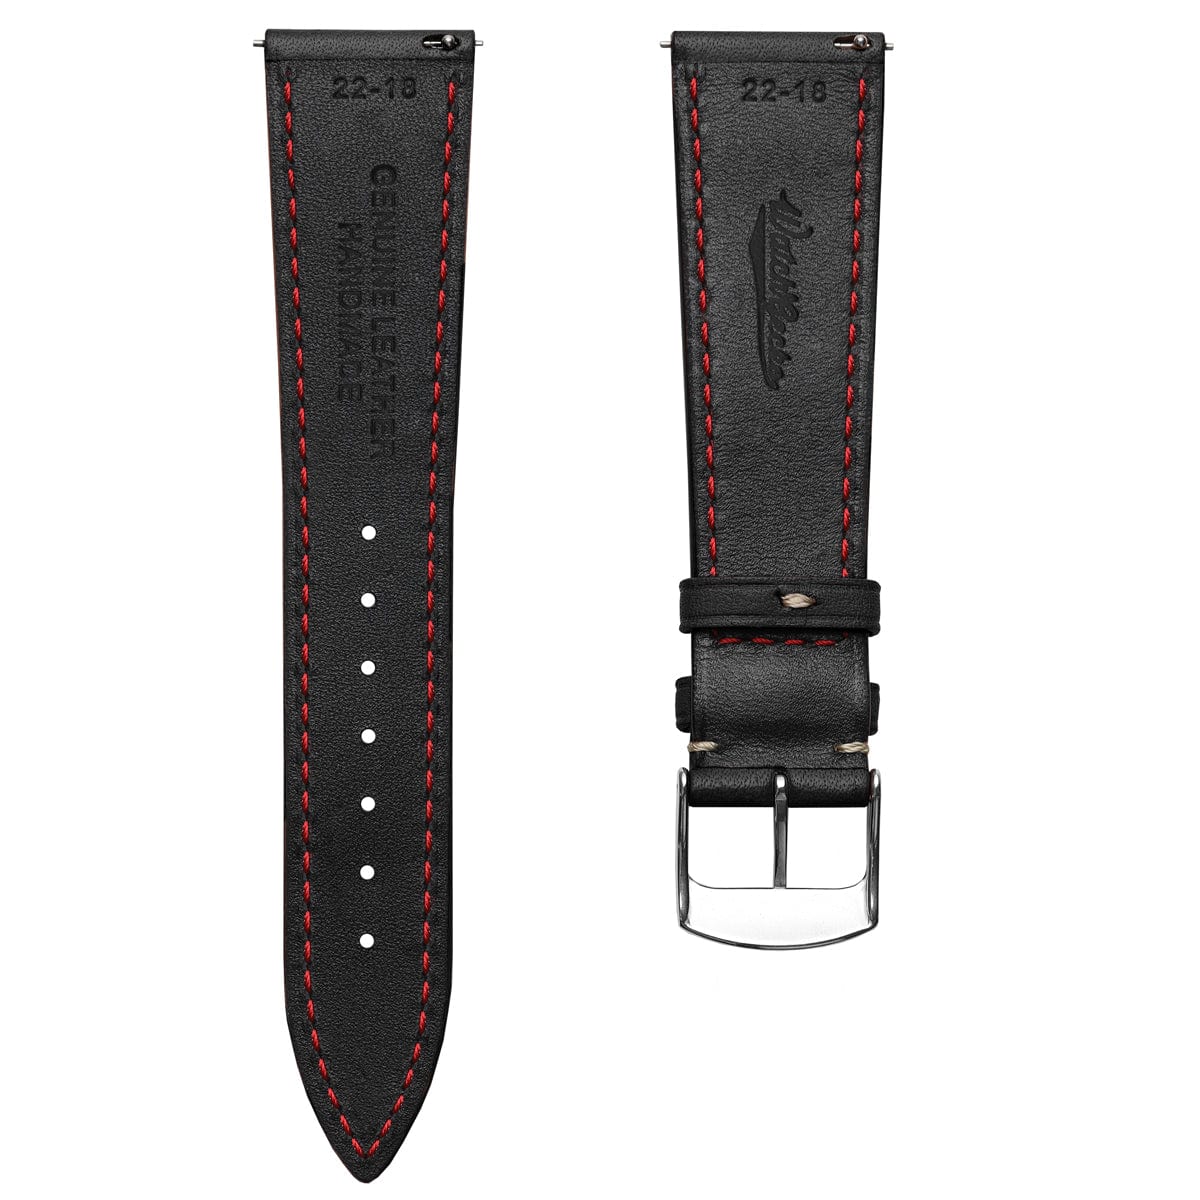 Stanton Badalassi Carlo Minerva Box Leather Padded Watch Strap